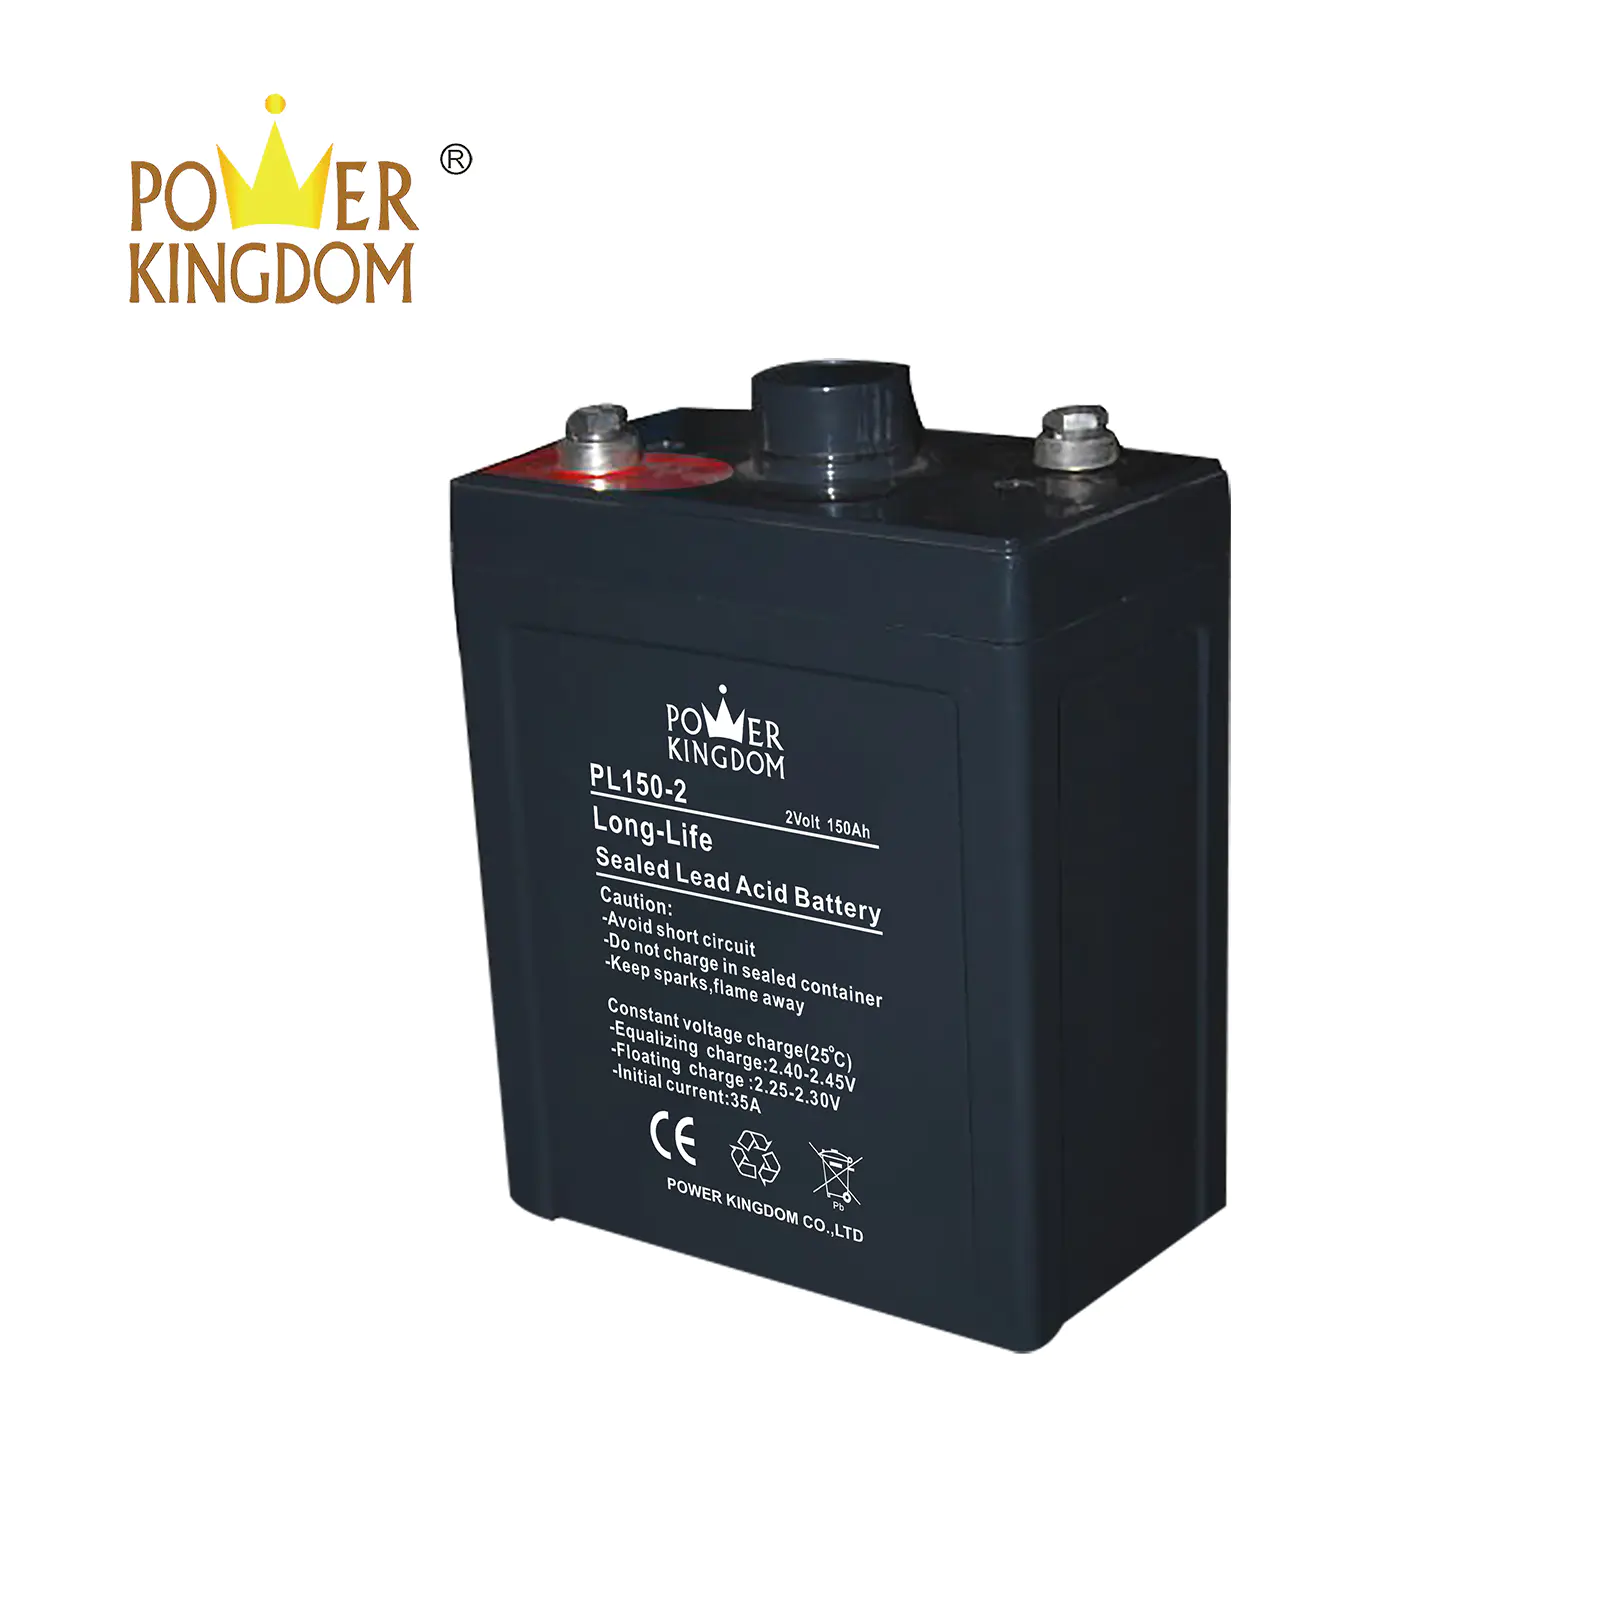 Power Kingdom popular 2v 150ah sealed lead acid battery